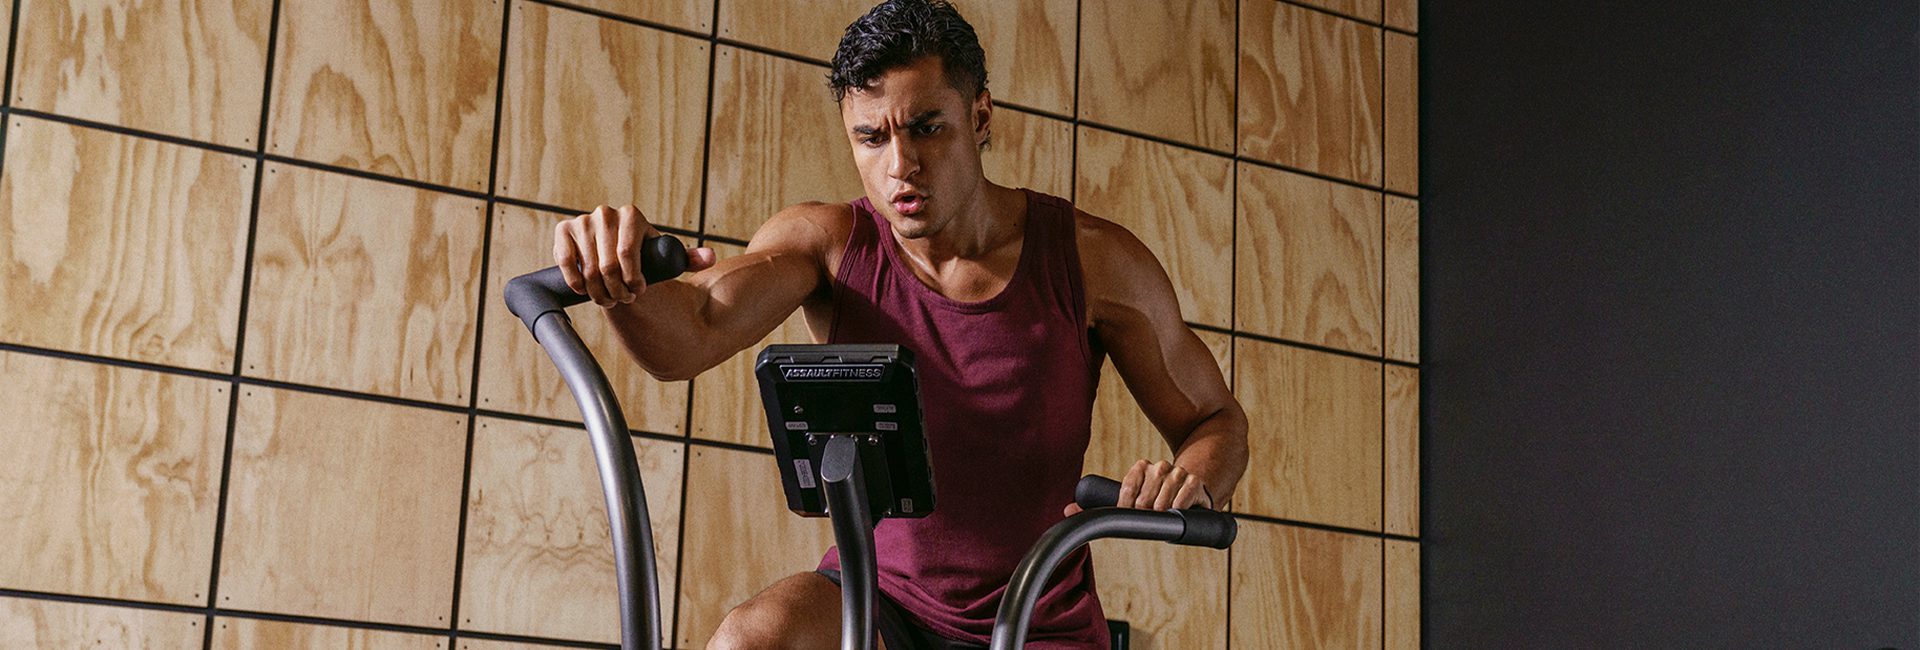 man riding a VIZMOX spin bike in a modern gym